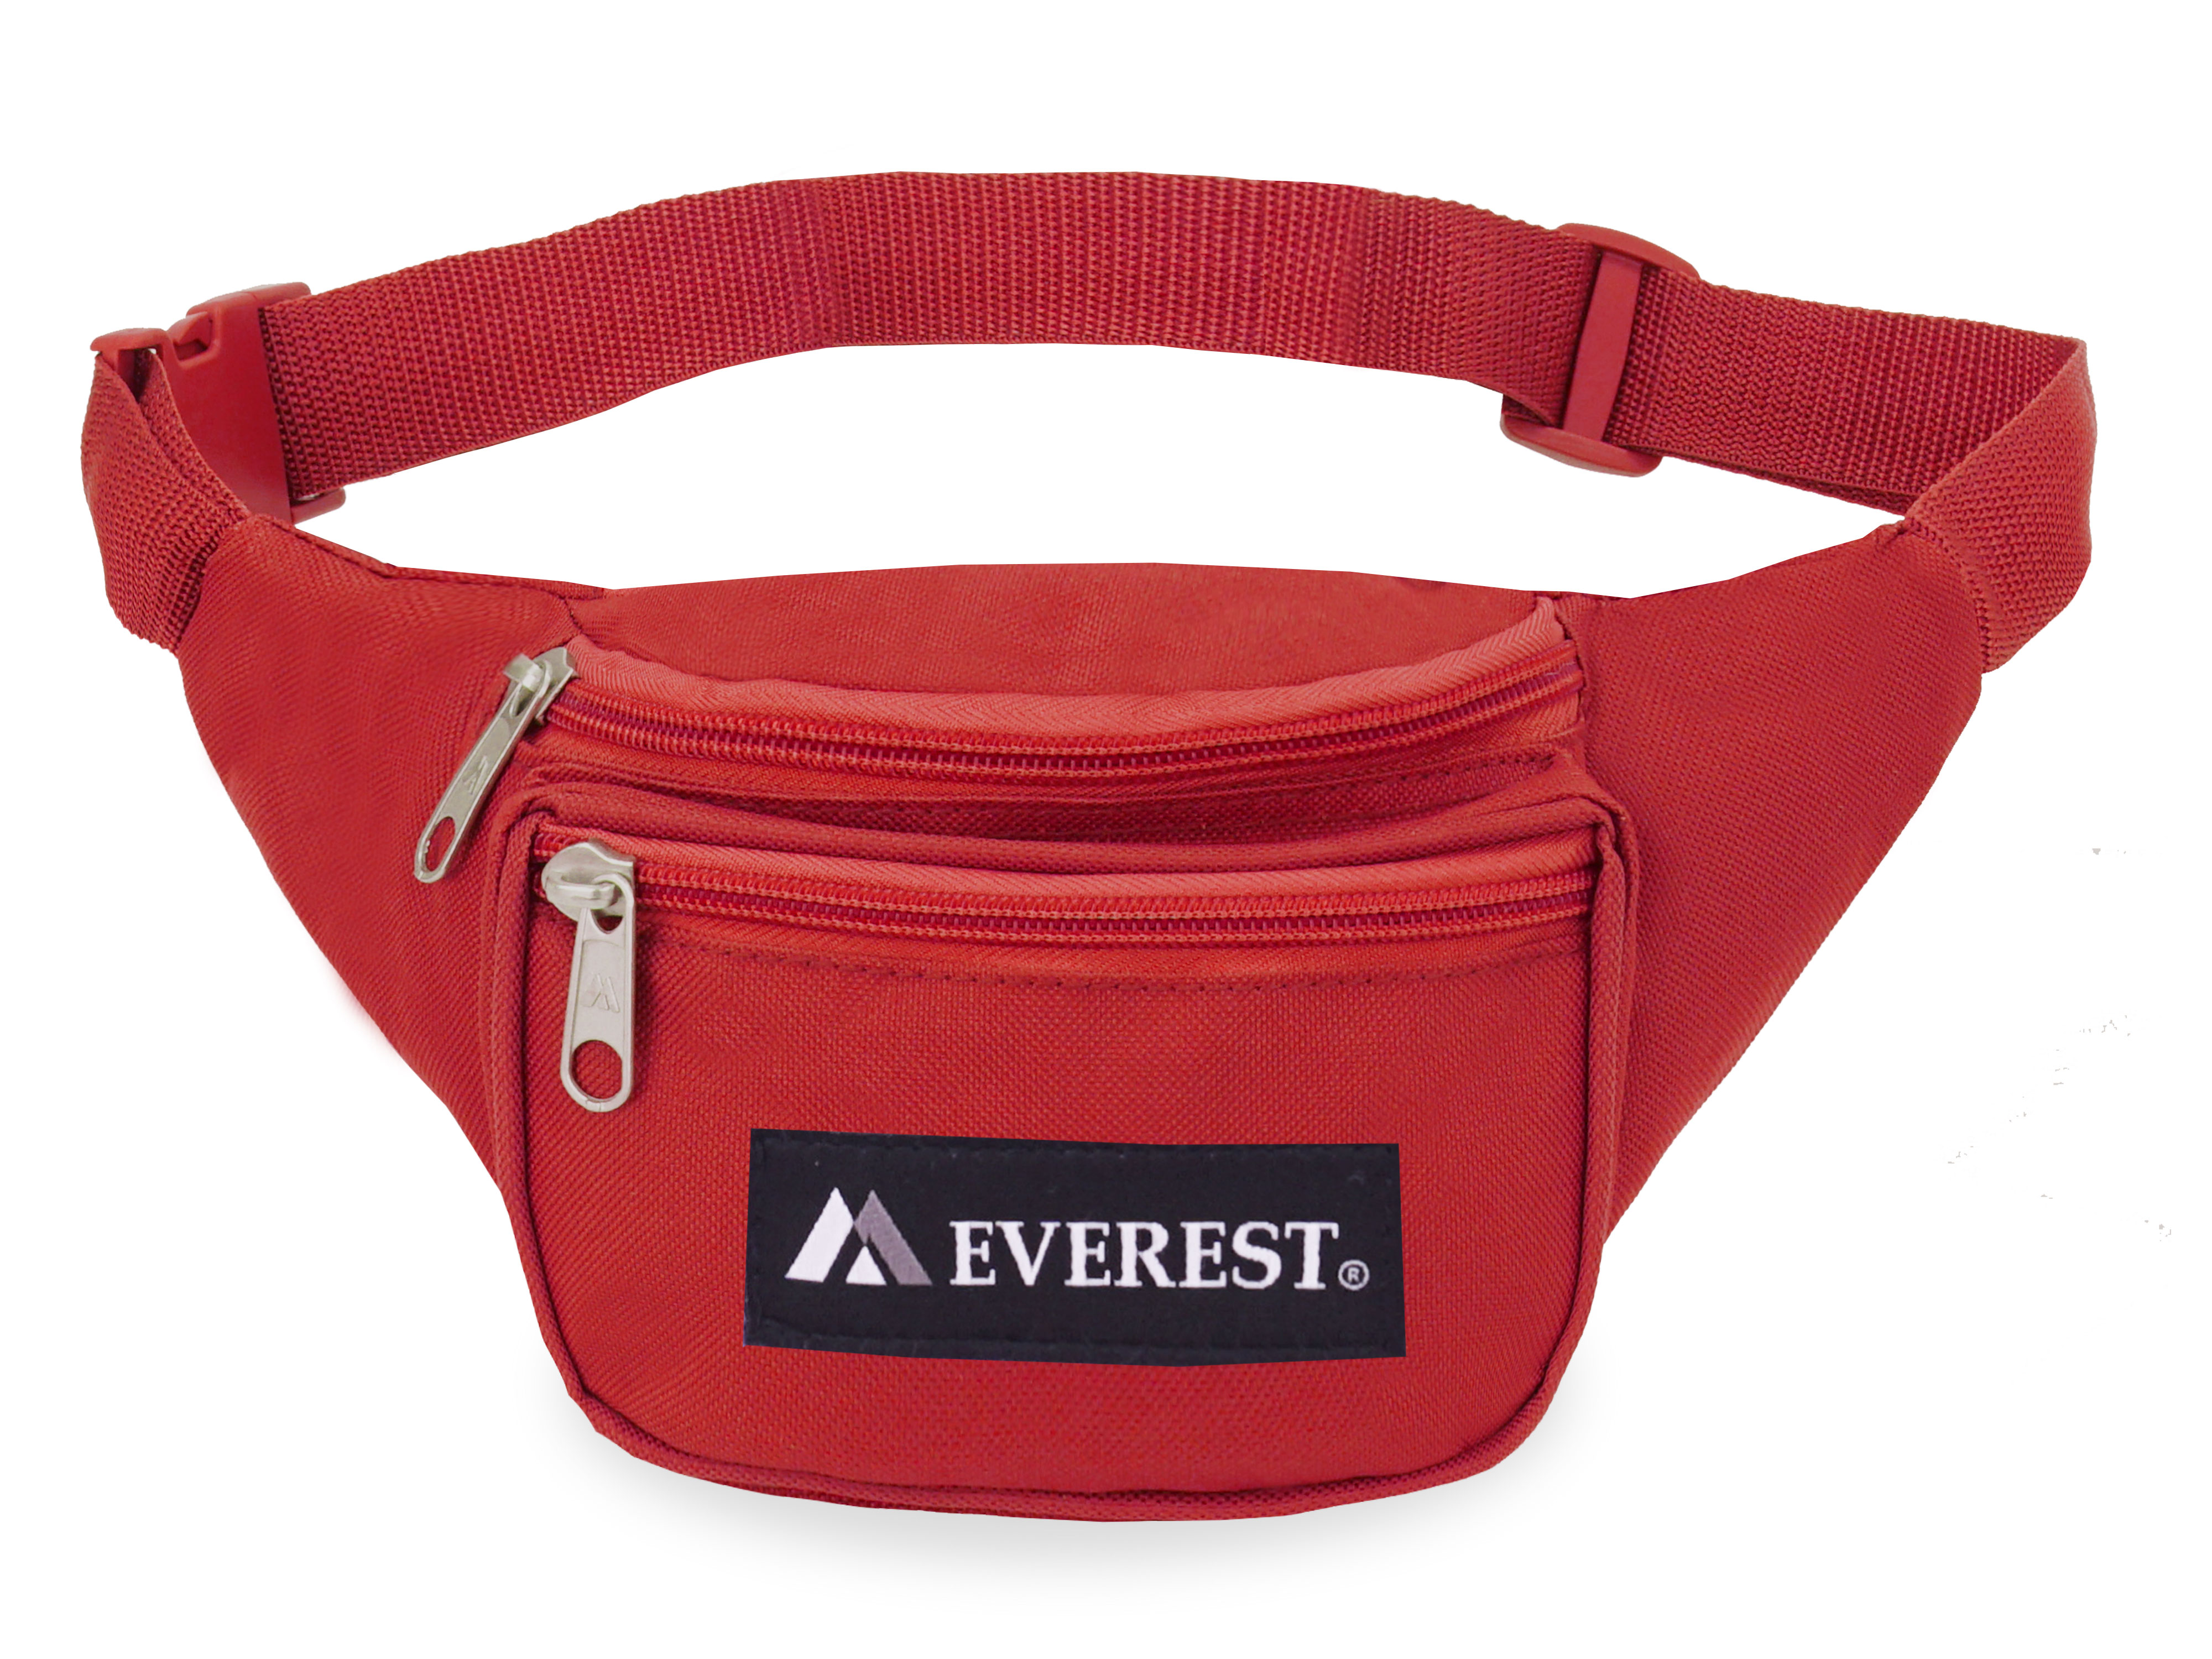 Everest Unisex Signature Waist Fanny Pack Red - image 1 of 4